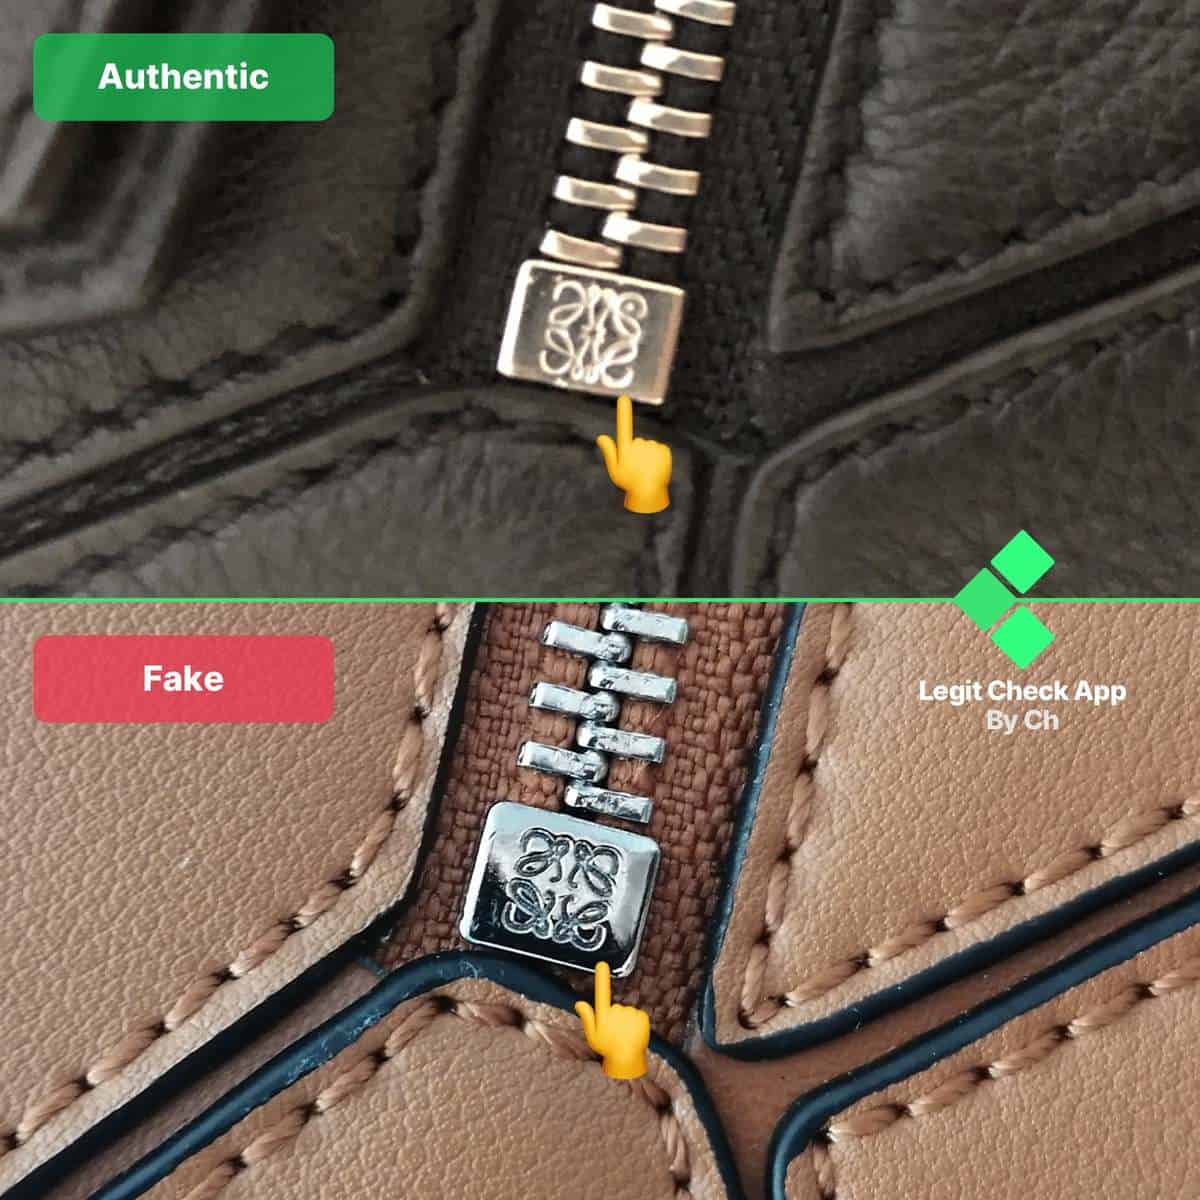 Loewe Authenticated Gate Pocket Handbag